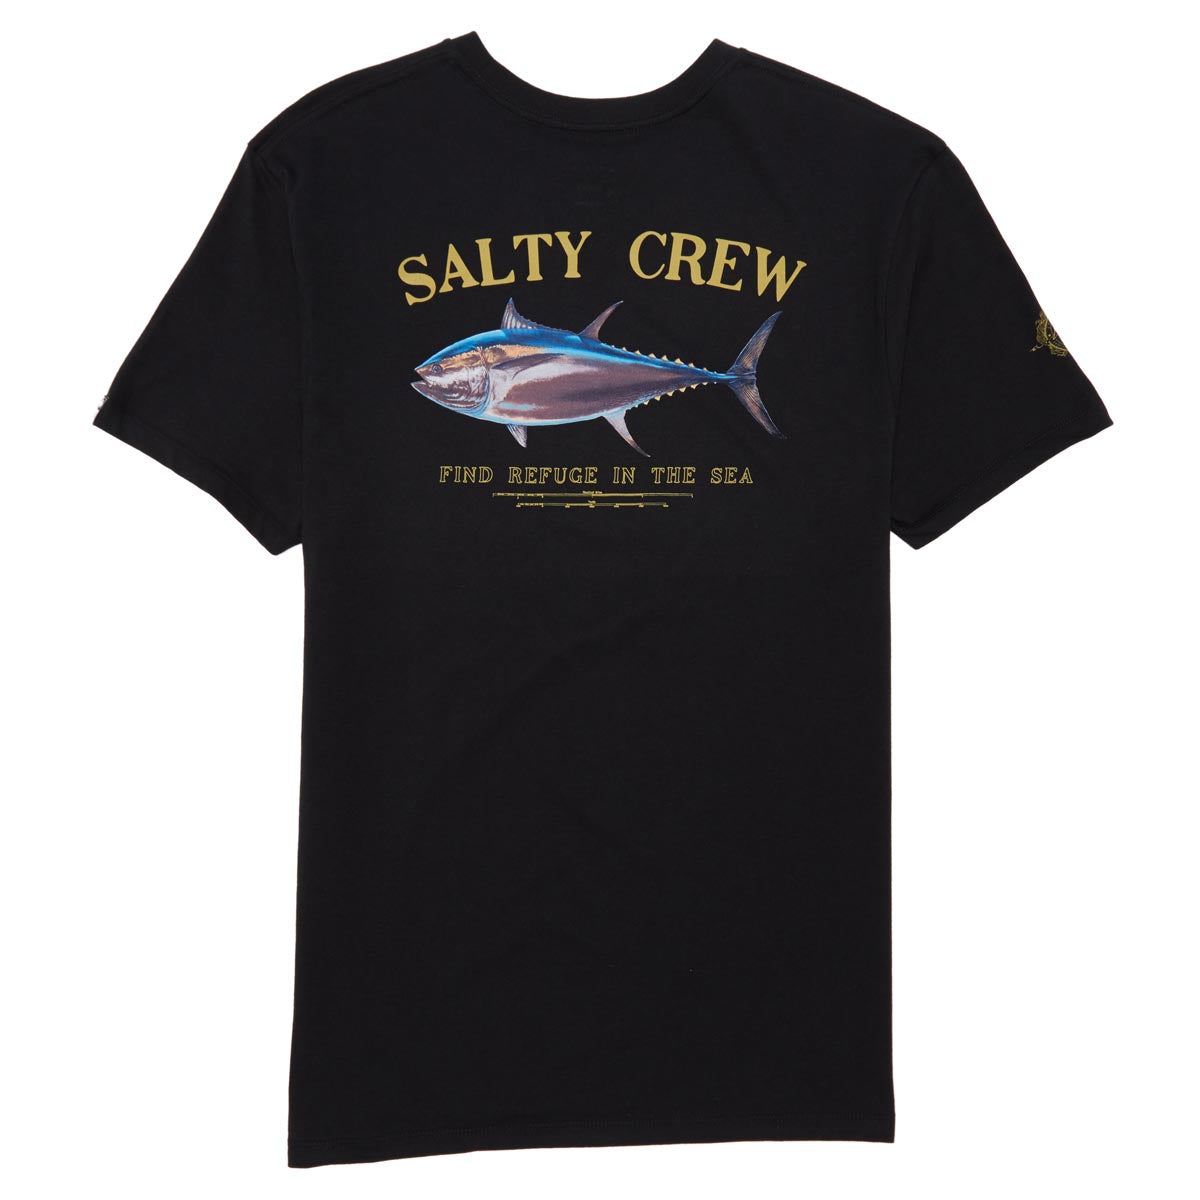 Salty Crew Big Blue T-Shirt - Black image 1